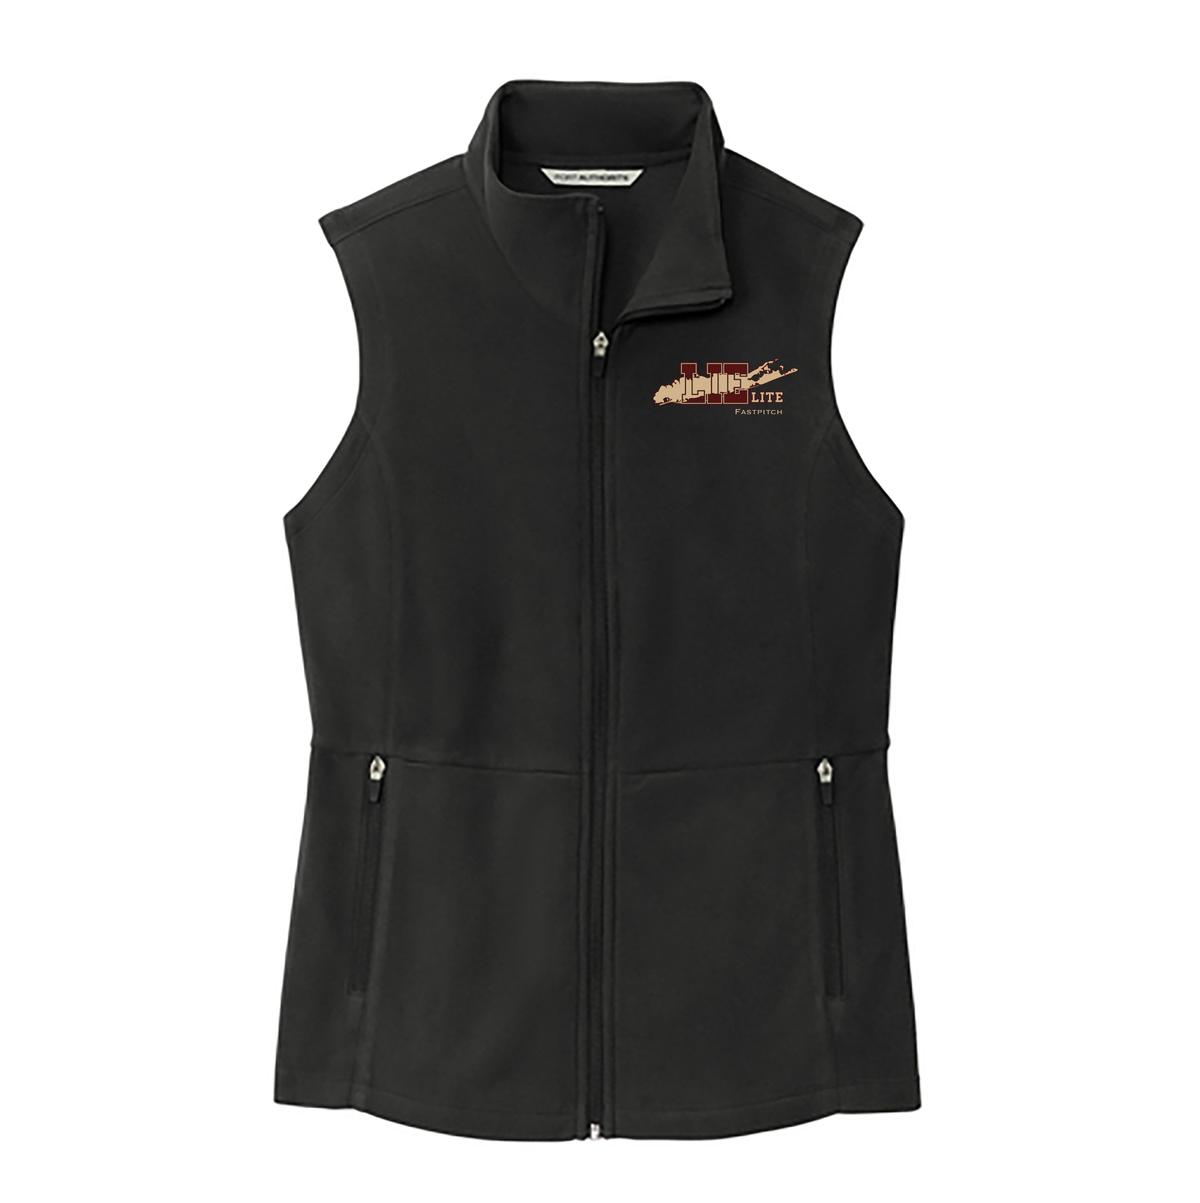 LI Elite Fastpitch Women's Accord Microfleece Vest